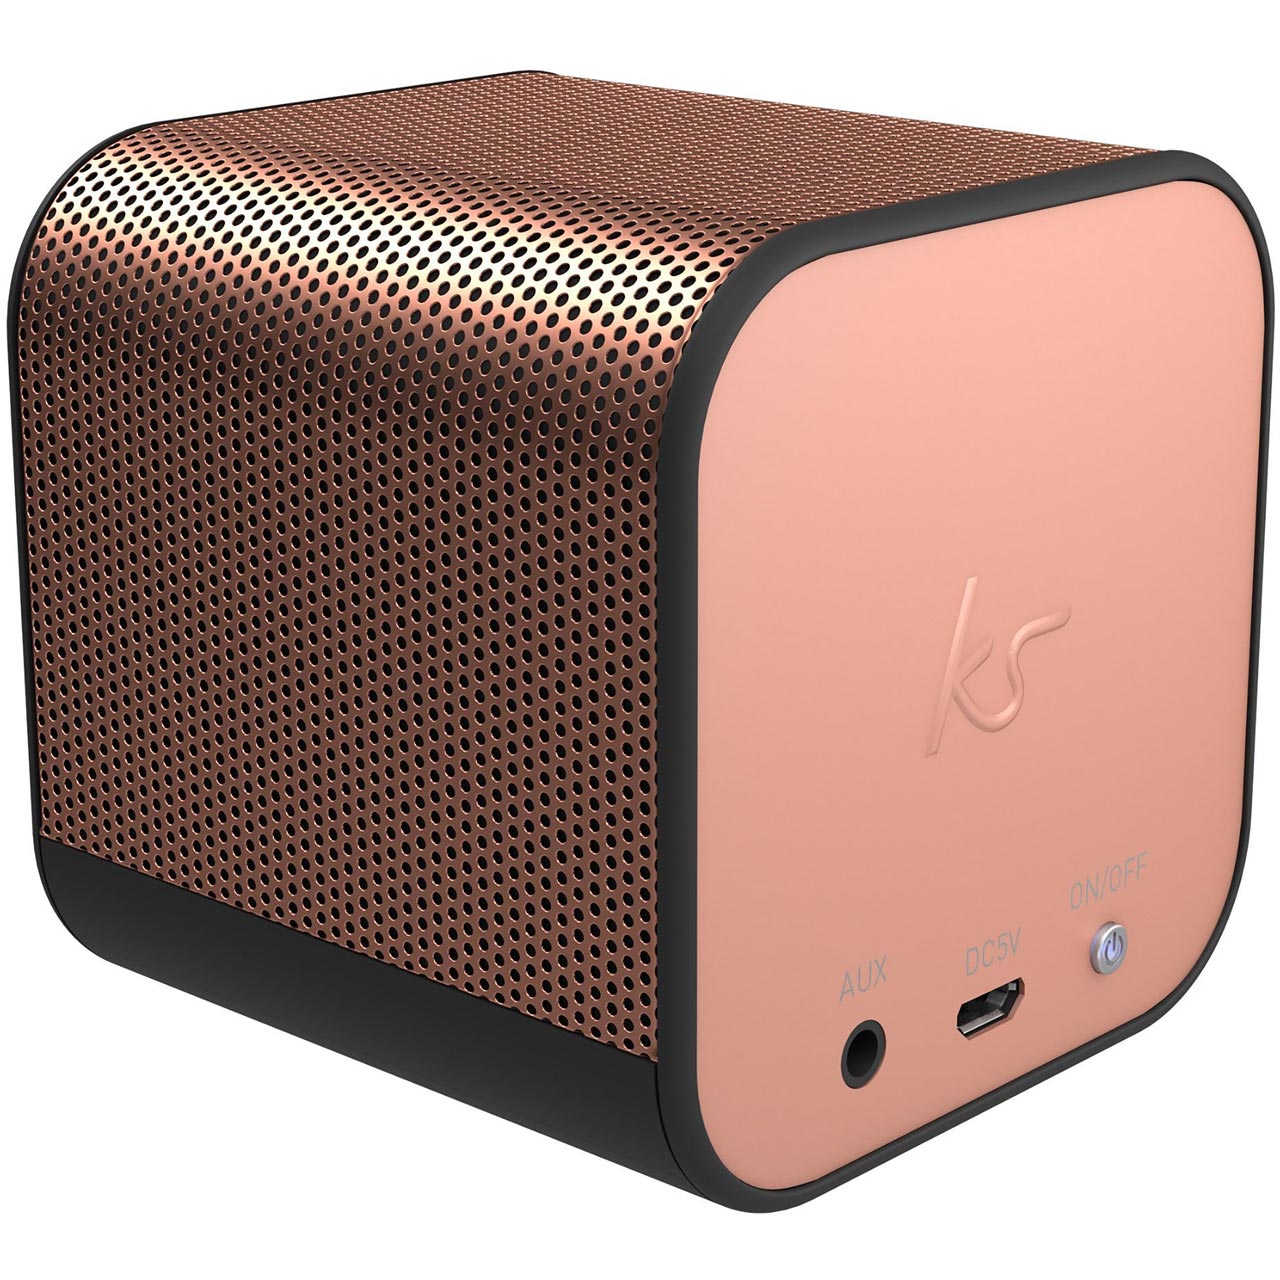 Kitsound Boom Cube Wireless Speaker Review